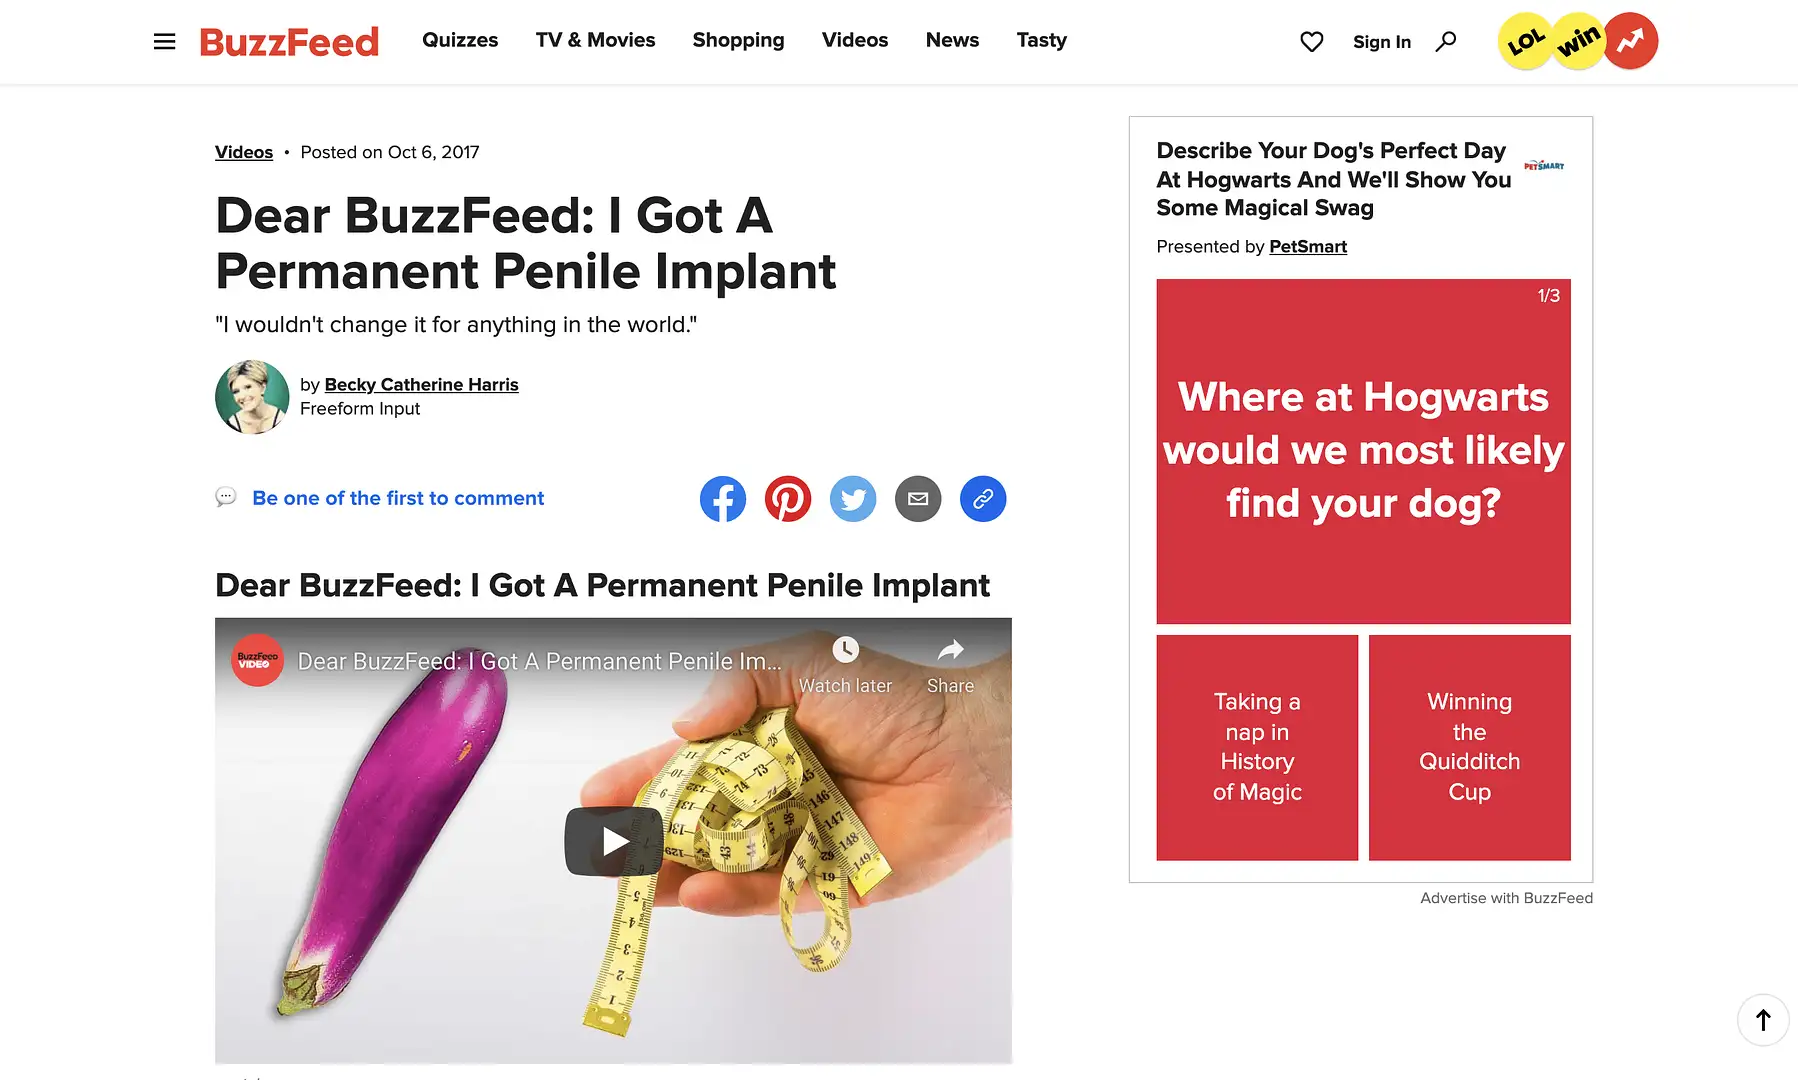 Dear BuzzFeed: I got a permeant penile implant